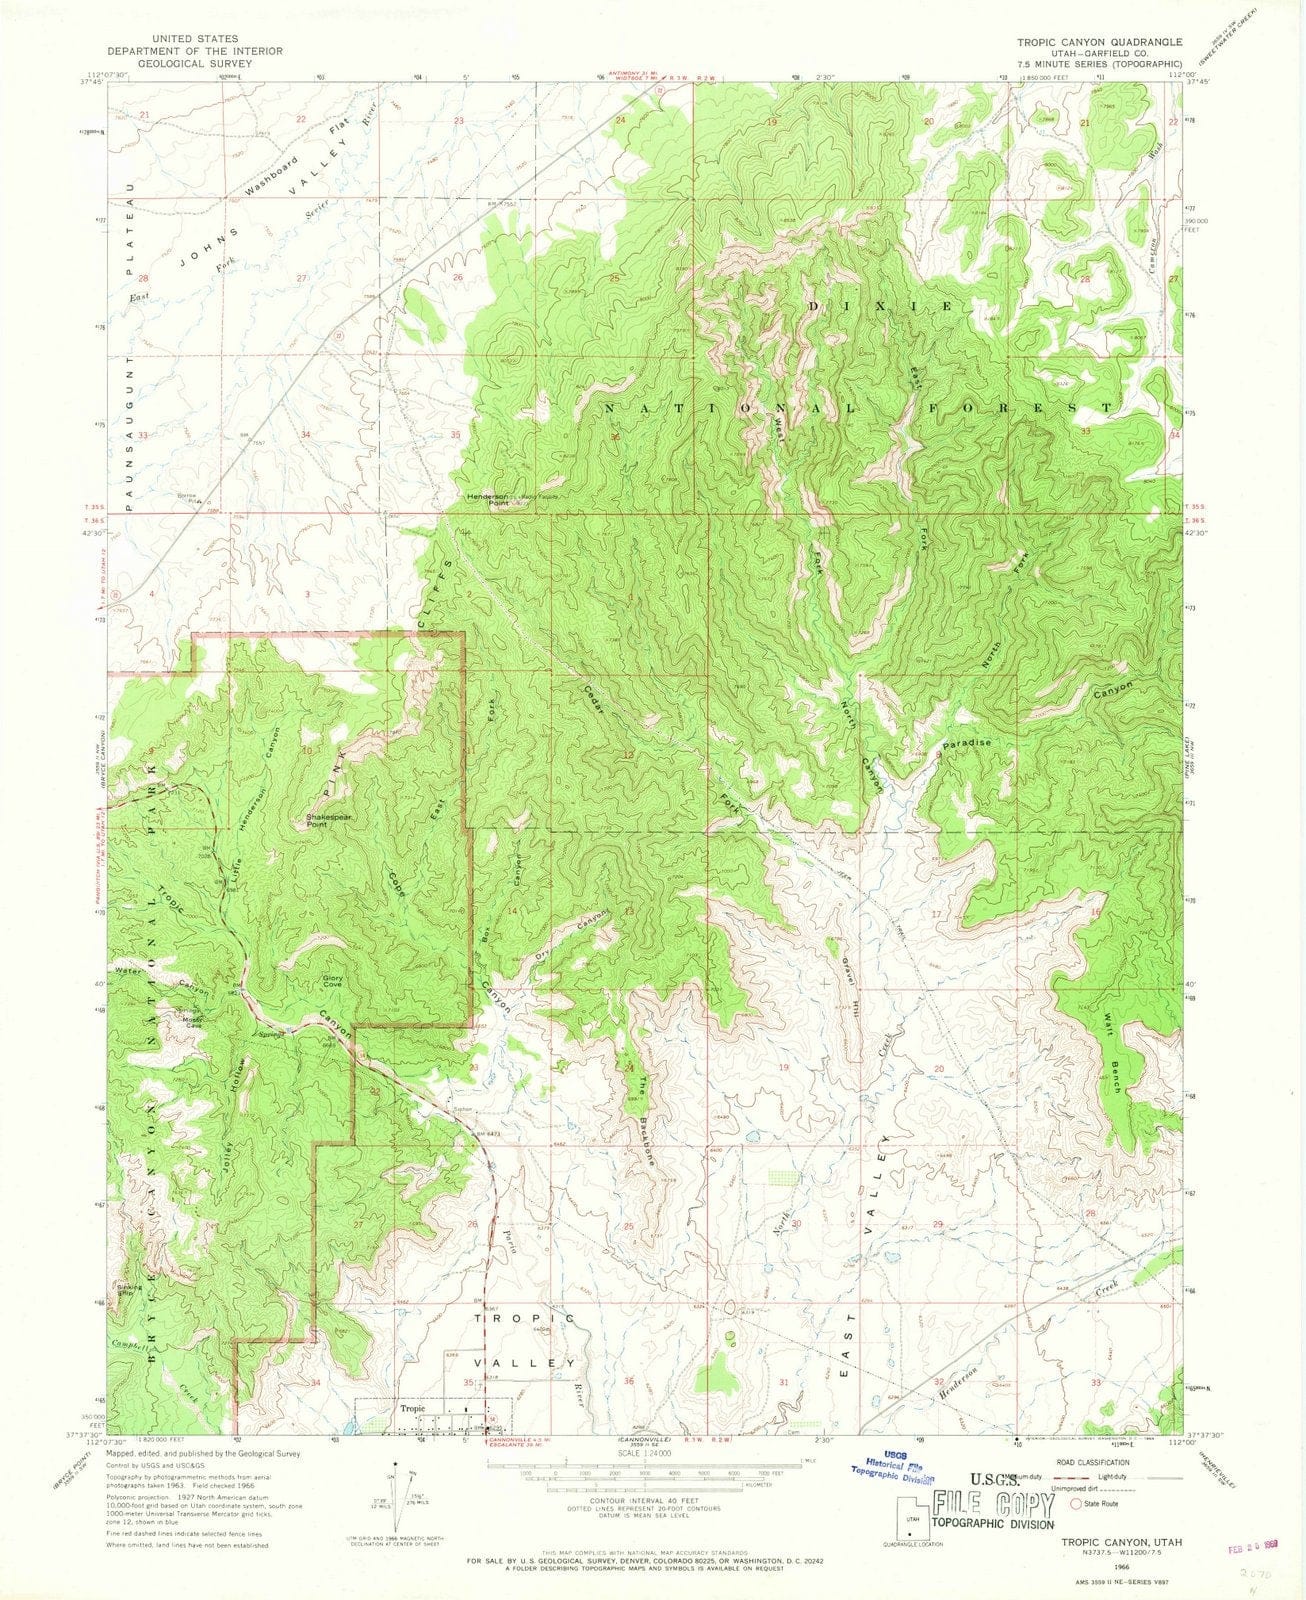 1966 Tropic Canyon, UT - Utah - USGS Topographic Map